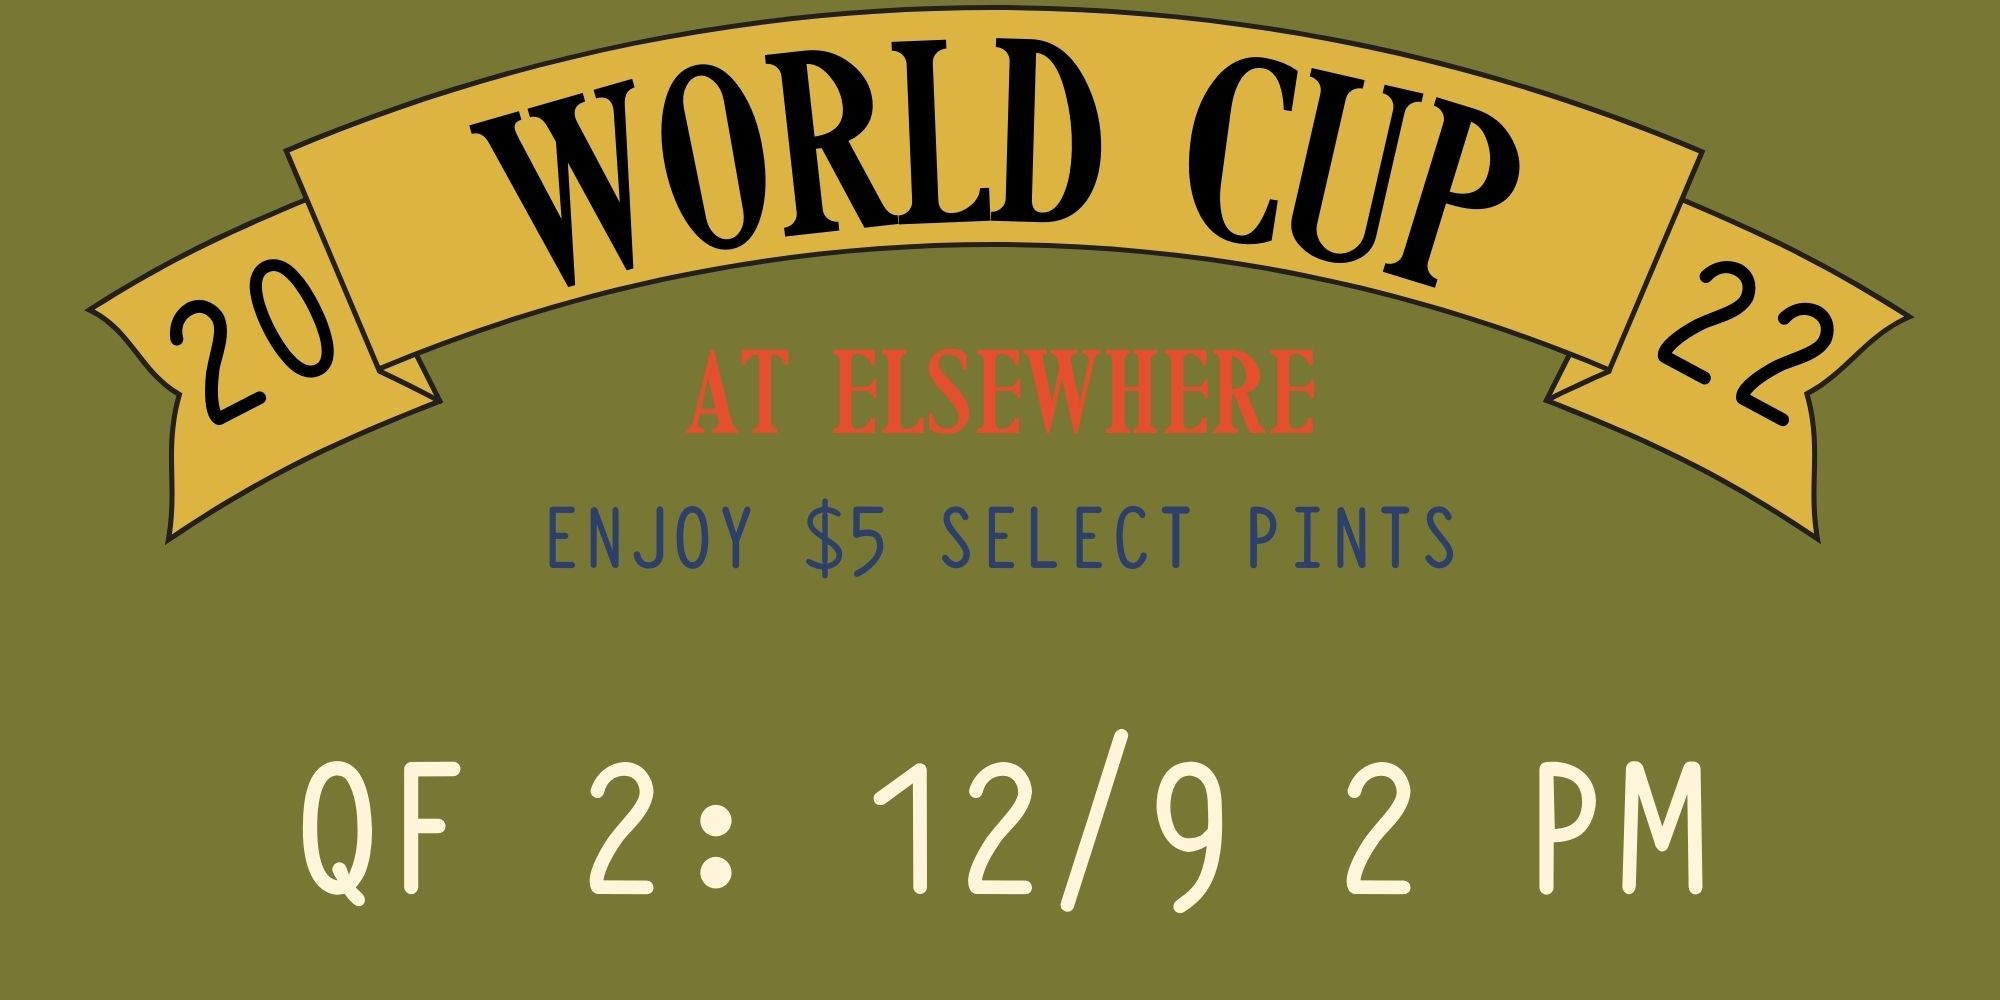 World Cup Showing Live-Quarter Finals Game 2 promotional image